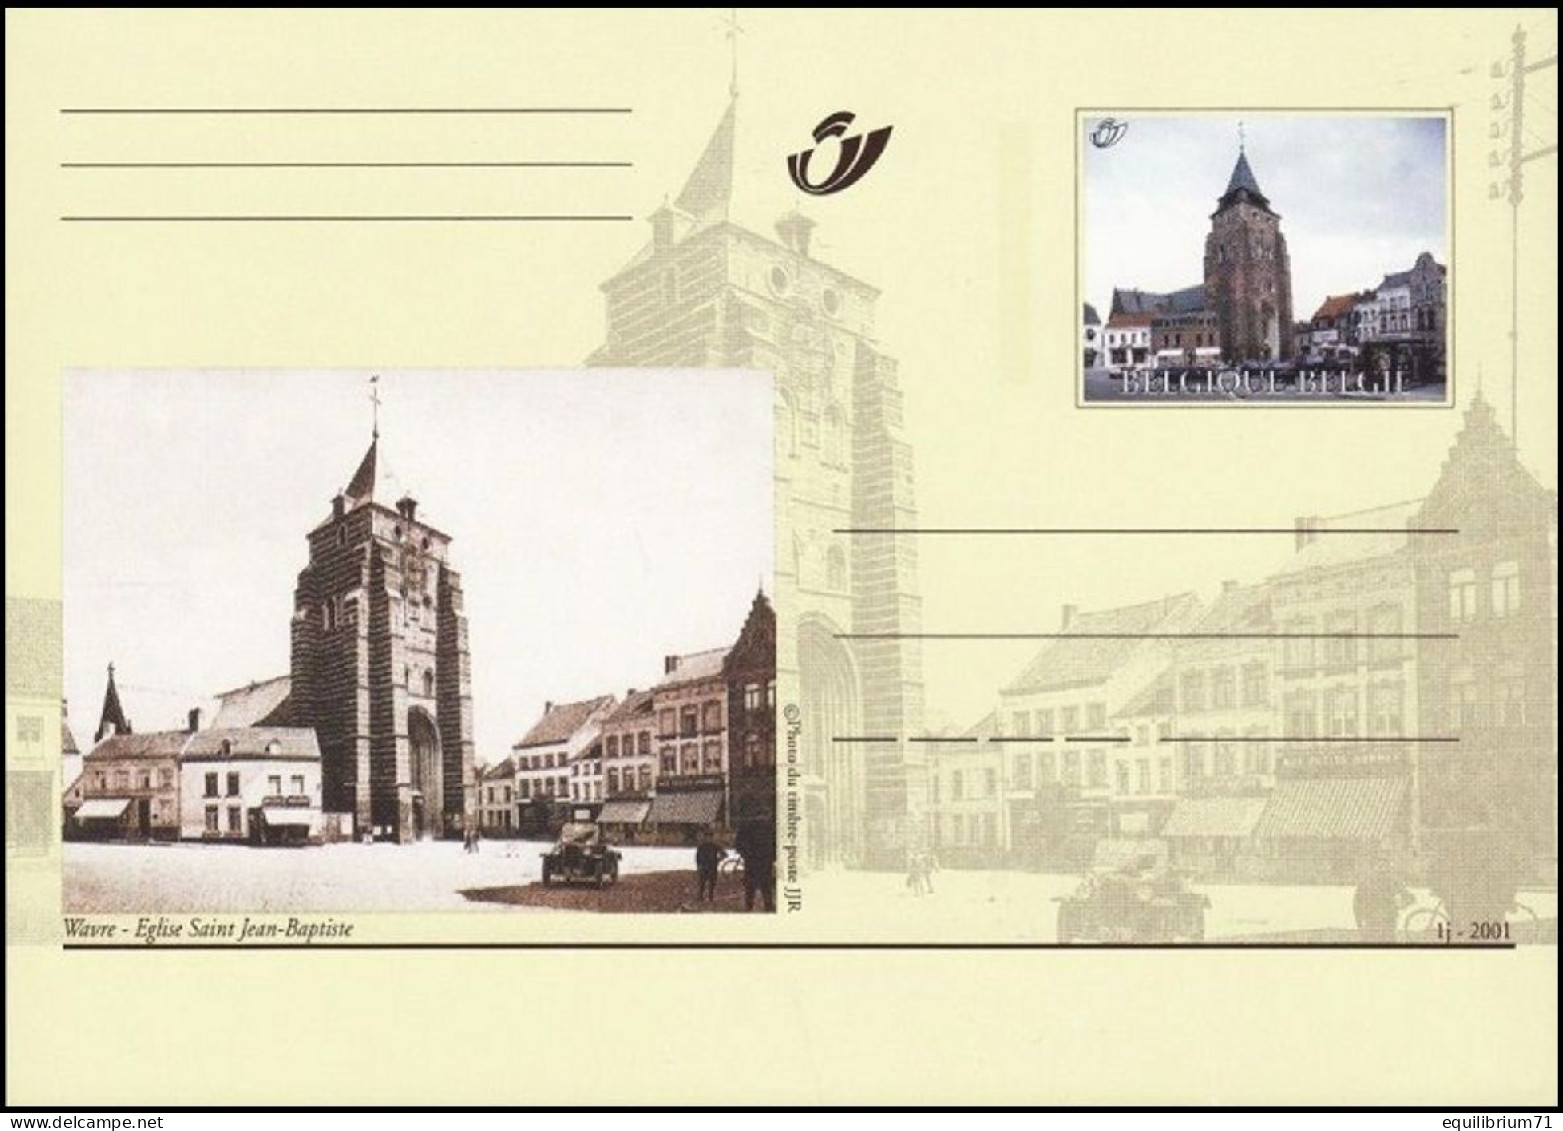 CP/BK79** - Cartes illustrées/Geïllustreerde briefkaarten/Illustrierte Postkarten - Autrefois & maintenant/Vroeger en nu